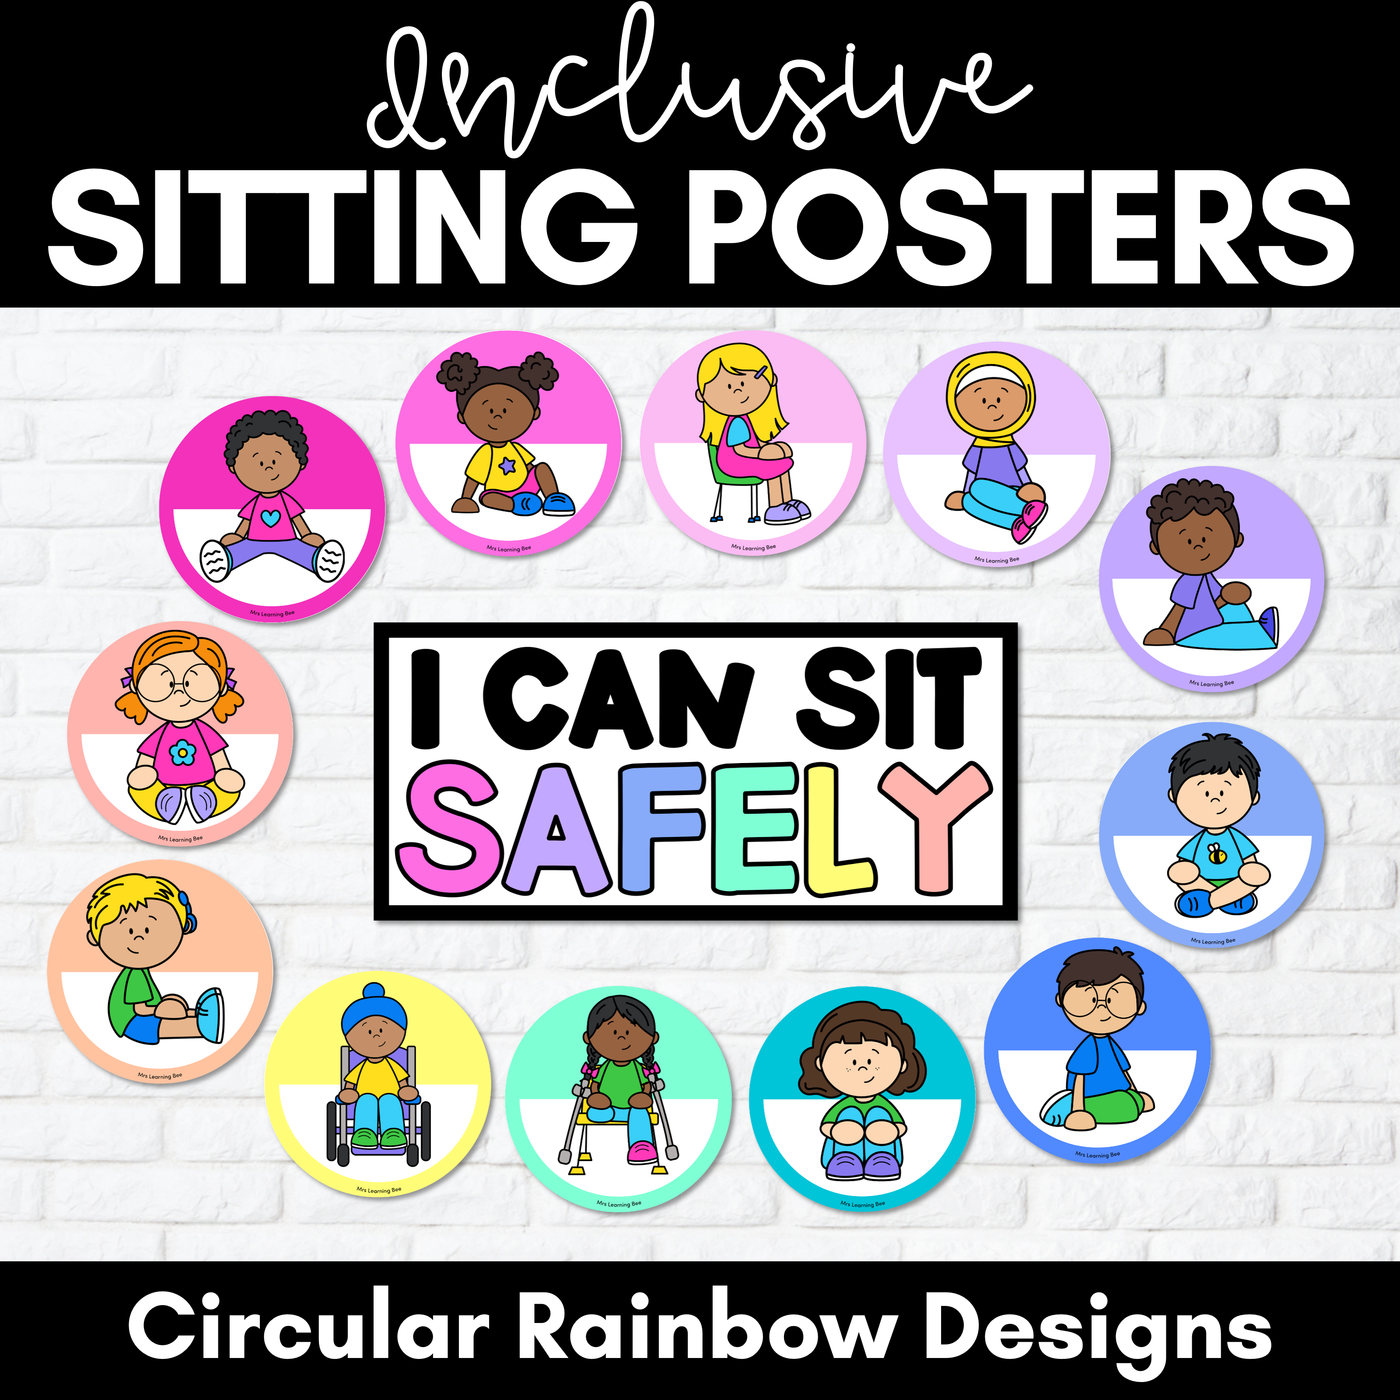 Inclusive Sitting Posters & Display - Circular Rainbow Design